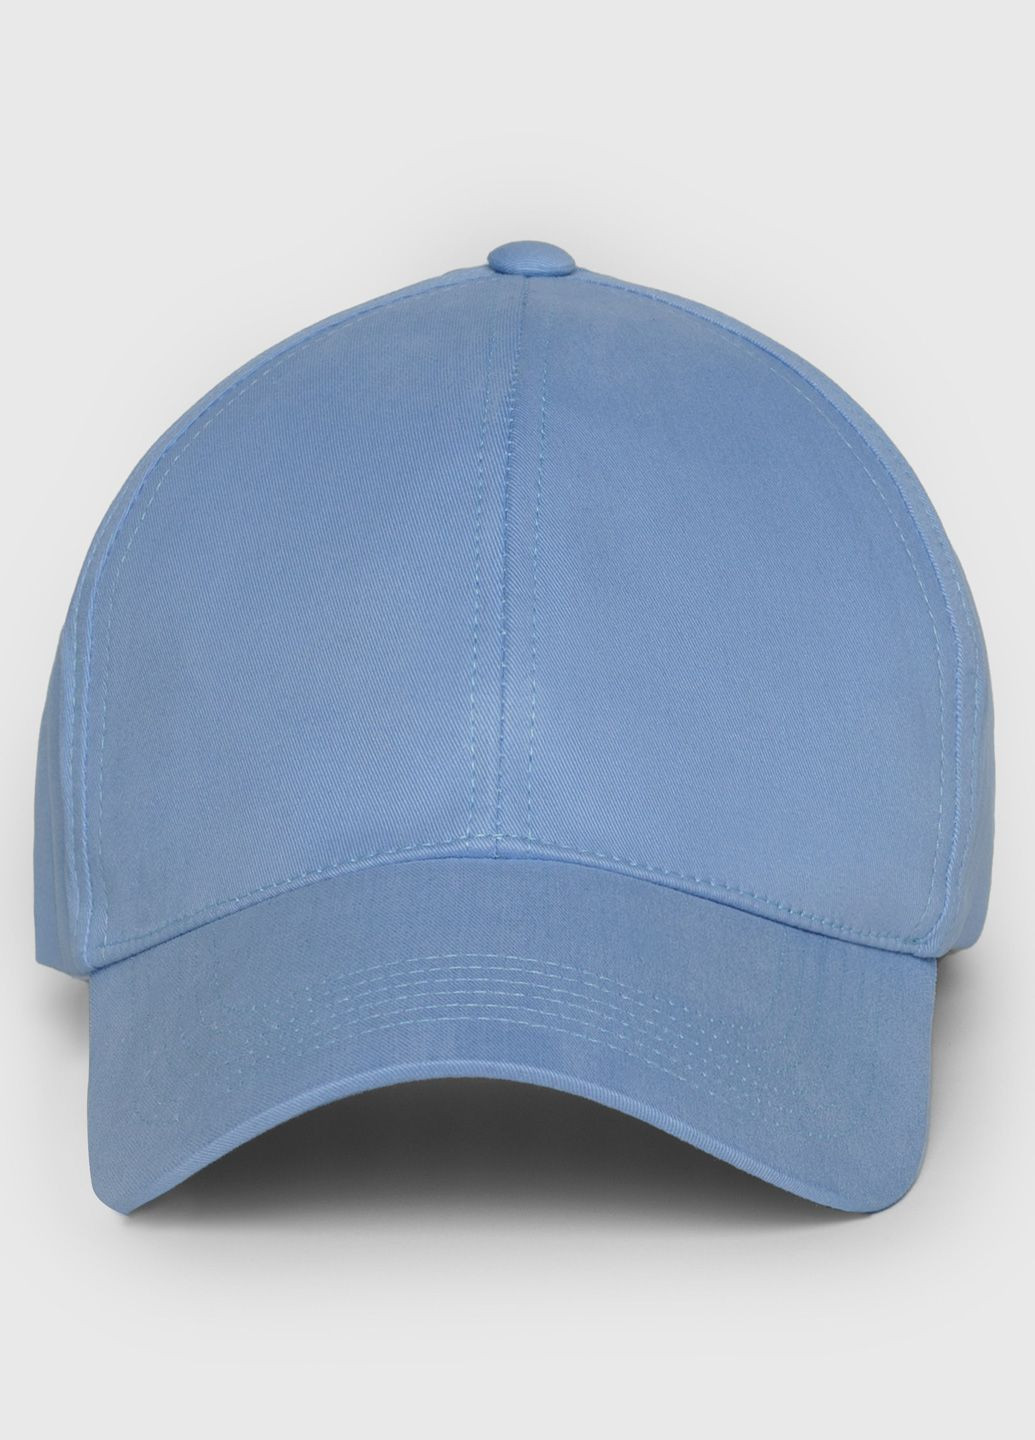 Кепка мужская голубая Arber кепка 1 (289870538)